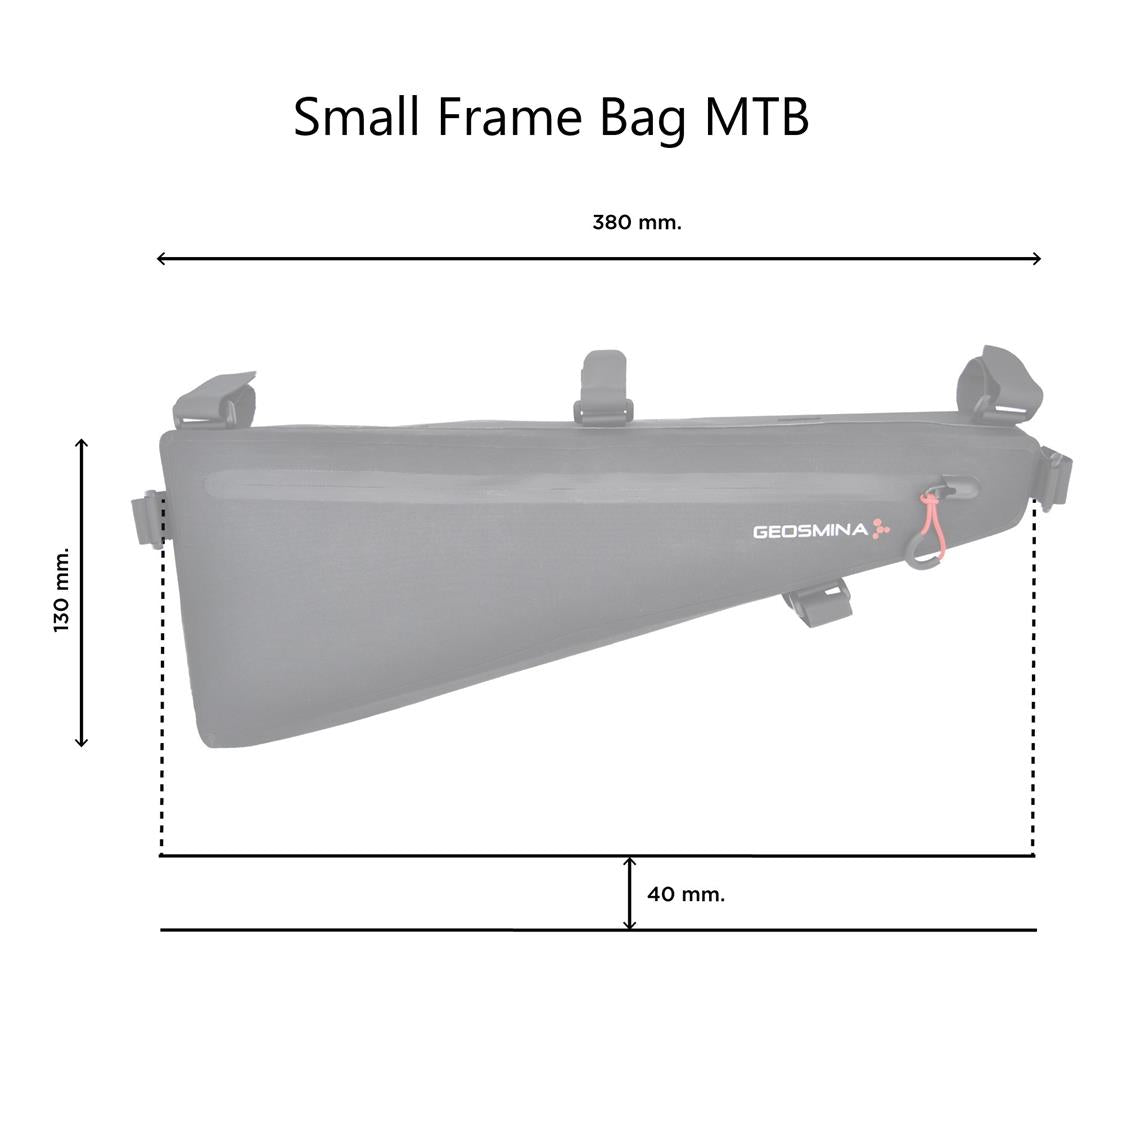 Dimensions Small Frame Bag MTB